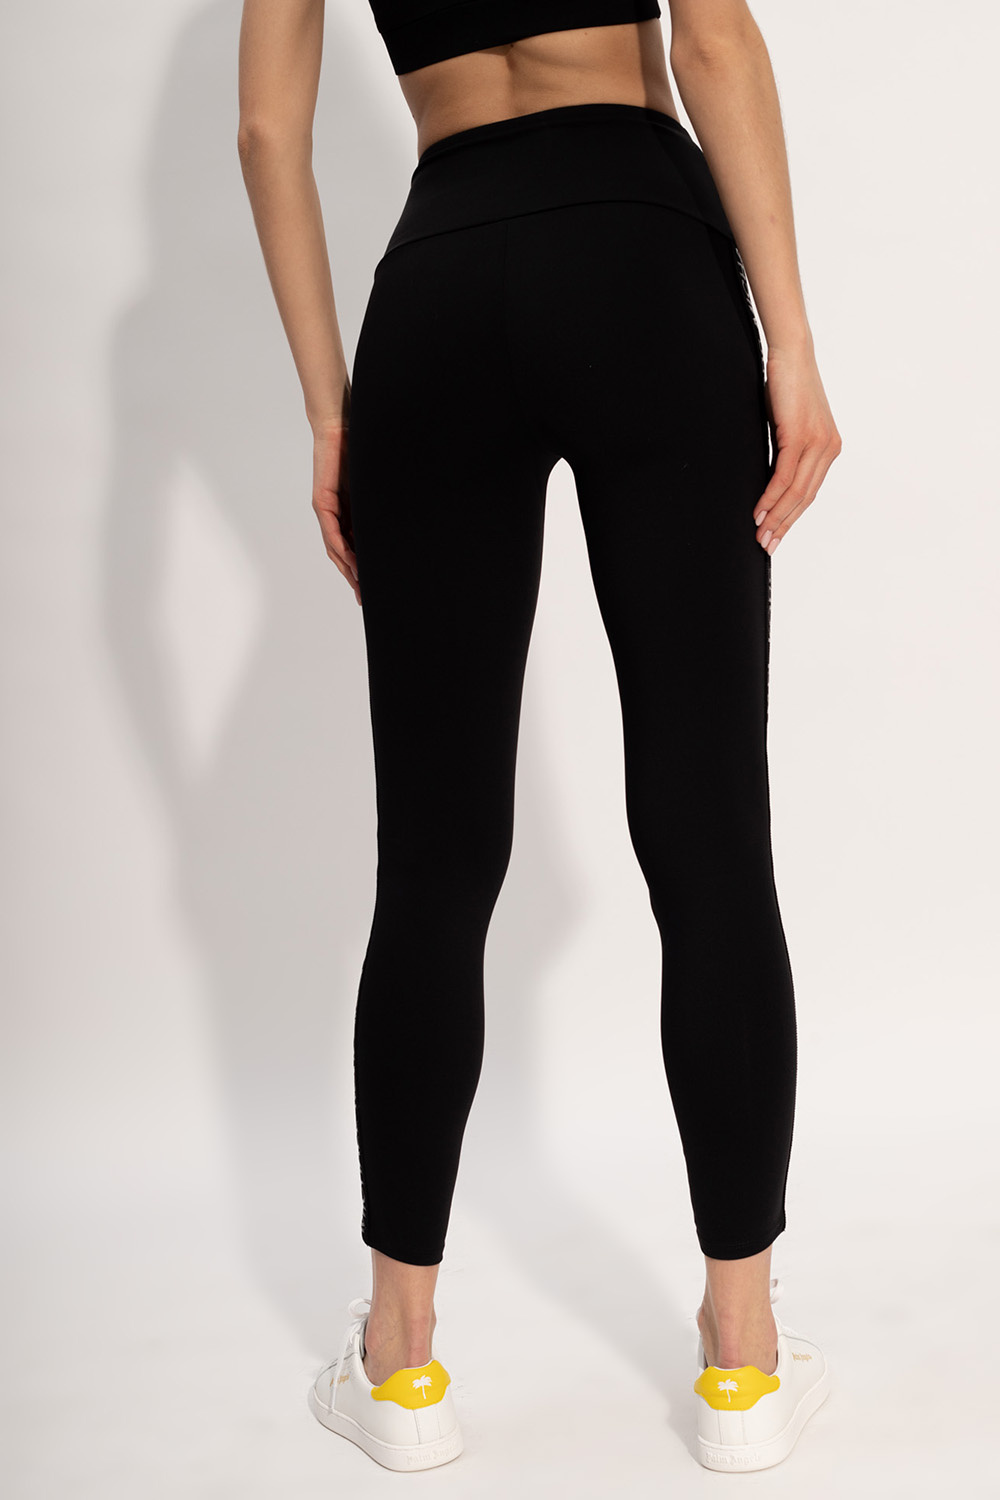 Miss Selfridge leather look high waisted leggings in black, IetpShops, Michael  Michael Kors Leggings with logo